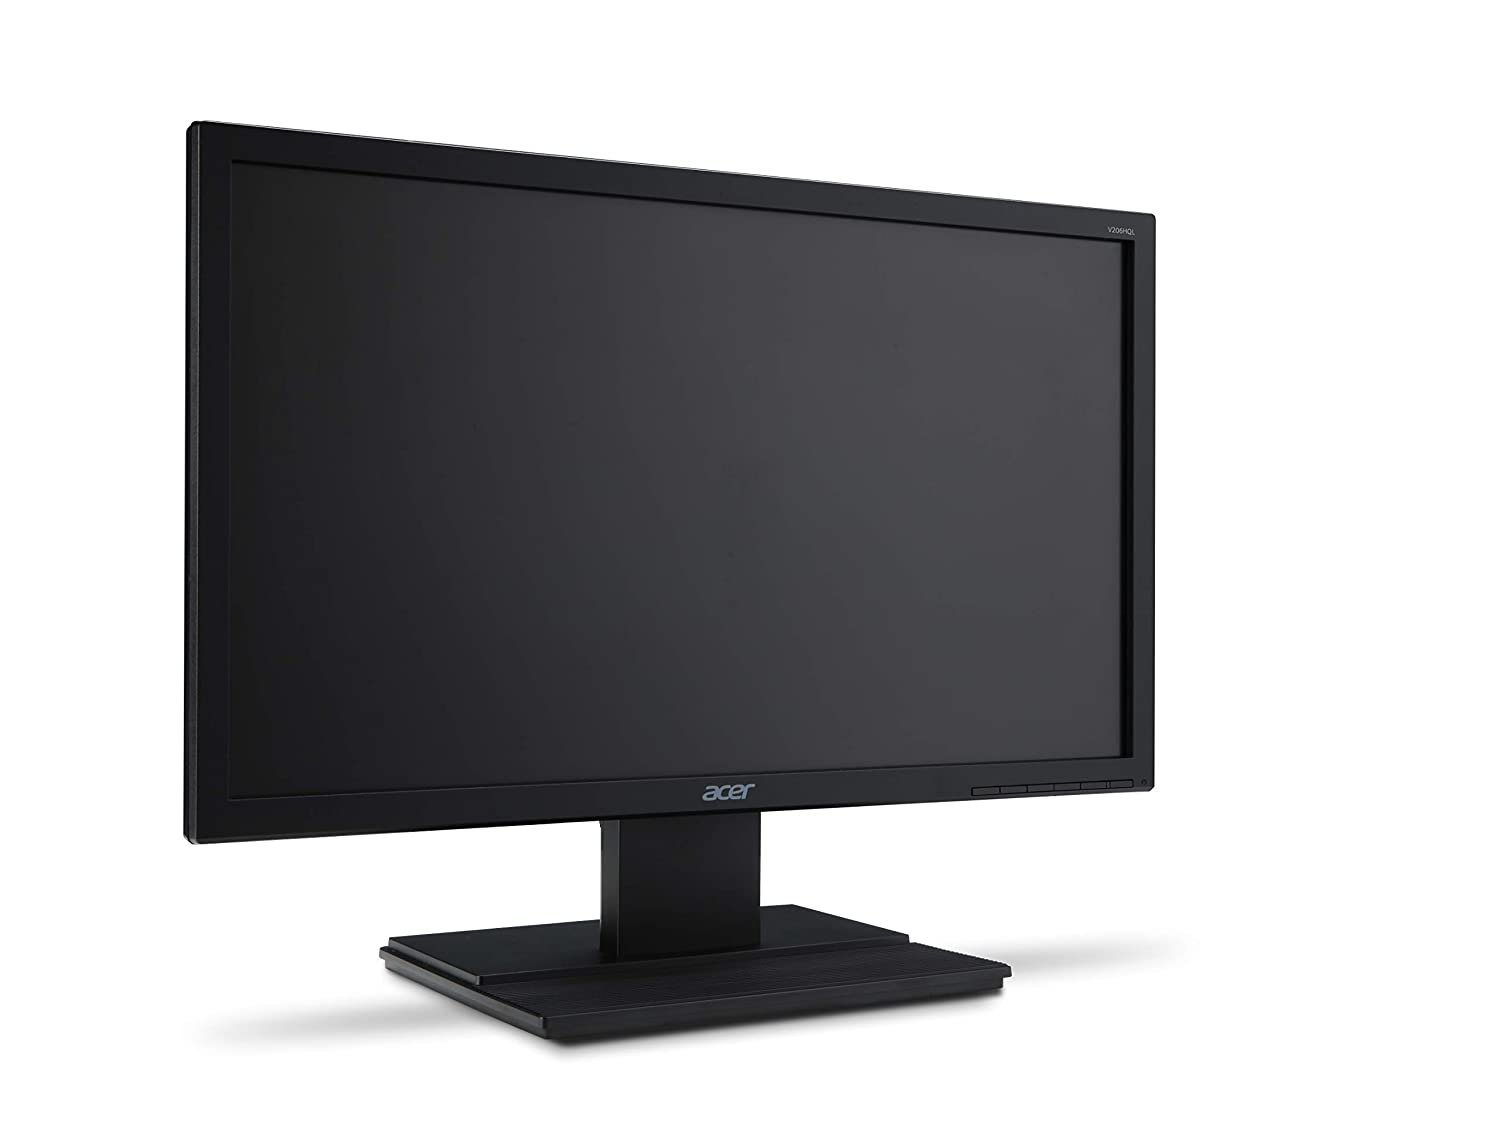 Acer Monitor (V206HQL) (19.5" Display || HD LED Backlit || HDMI, VGA Ports and Stereo Speakers )